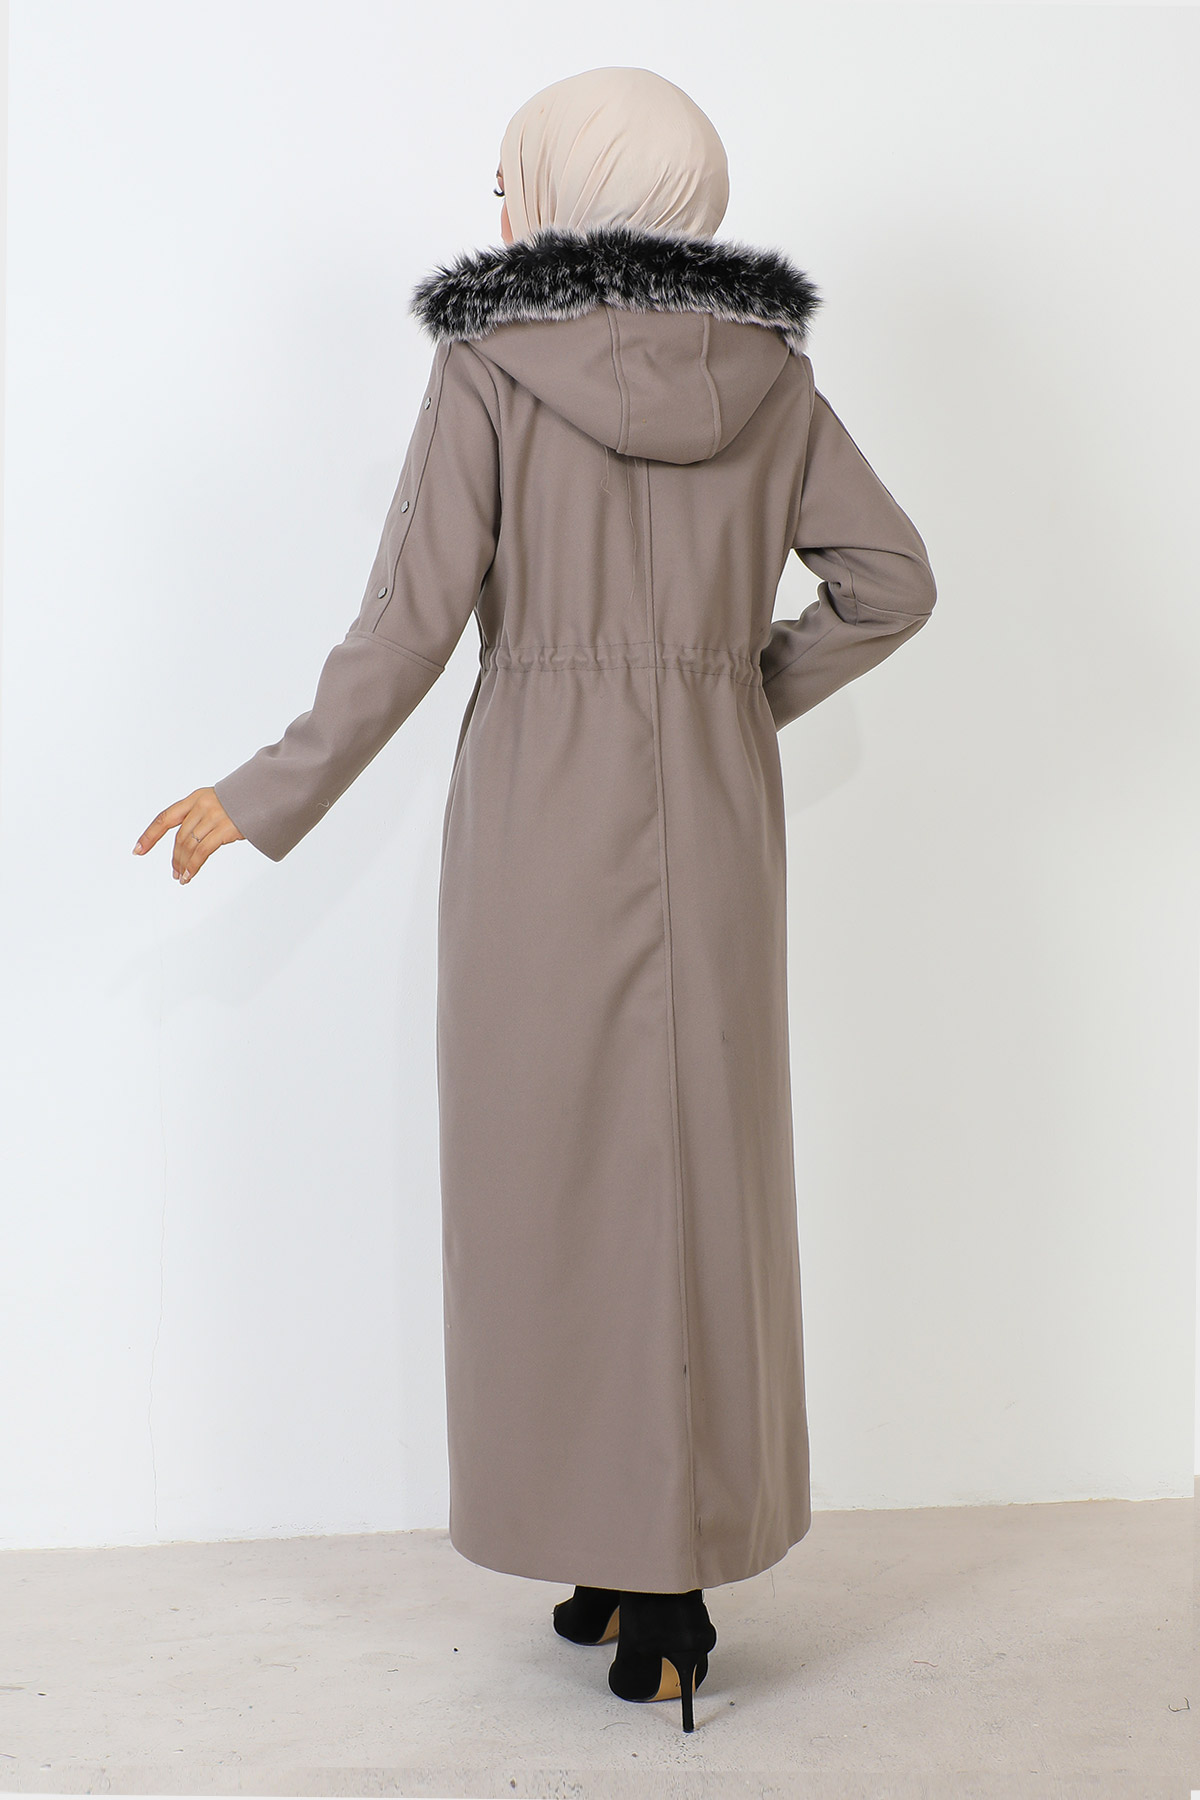 dresses for hijab prom